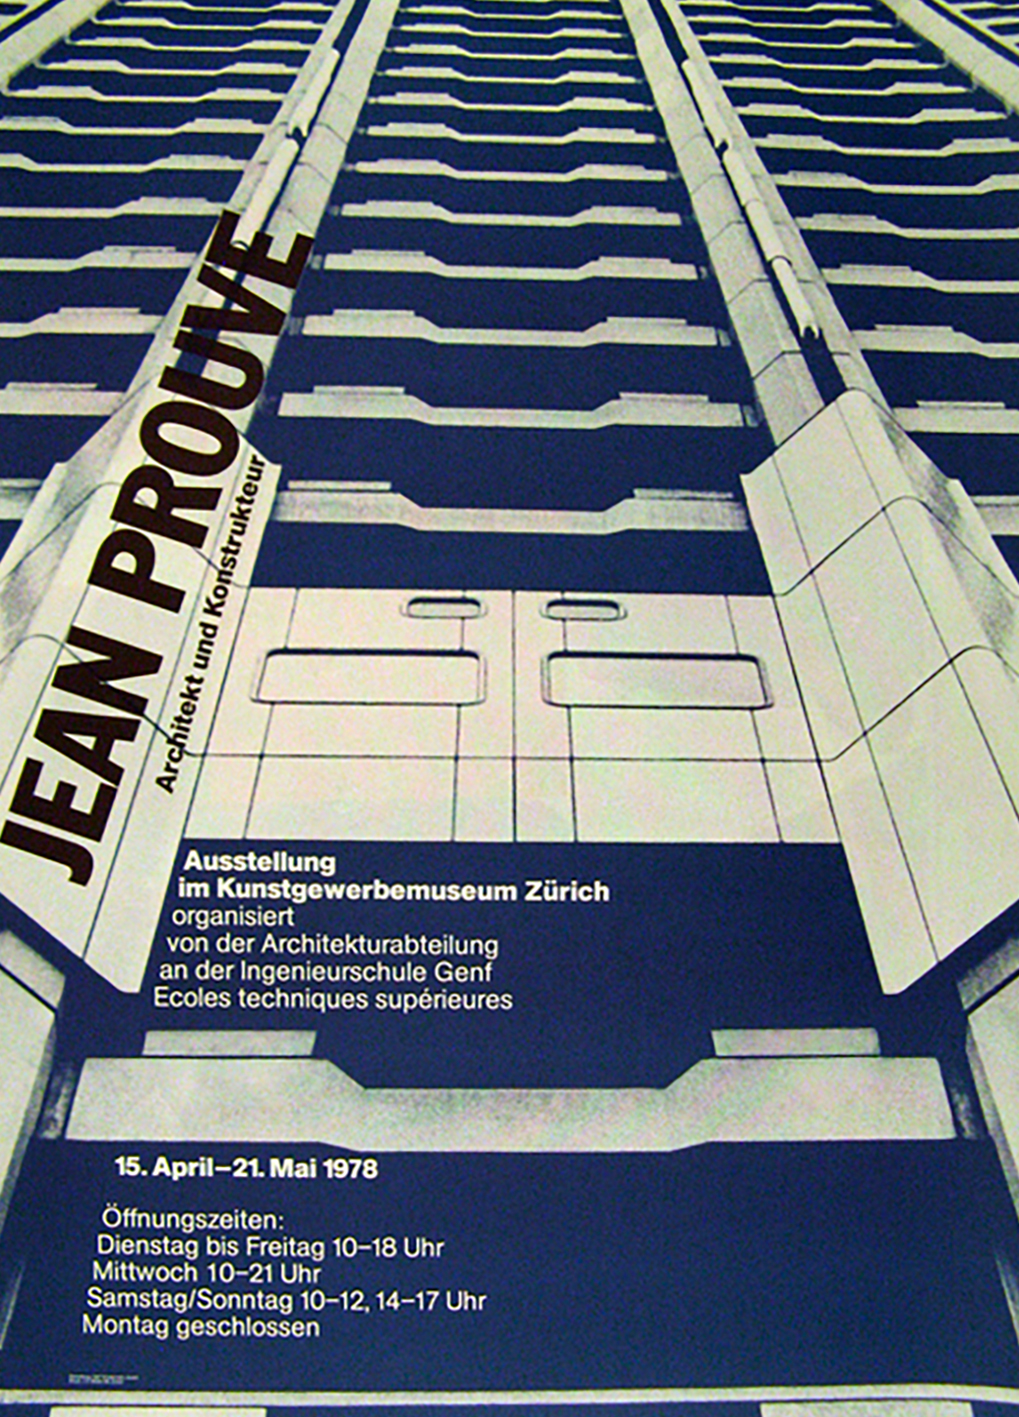 Poster designed by Siegfried Odermatt for an exhibition of Prouvé’s work at the Museum für Gestaltung, Zürich, in 1978.